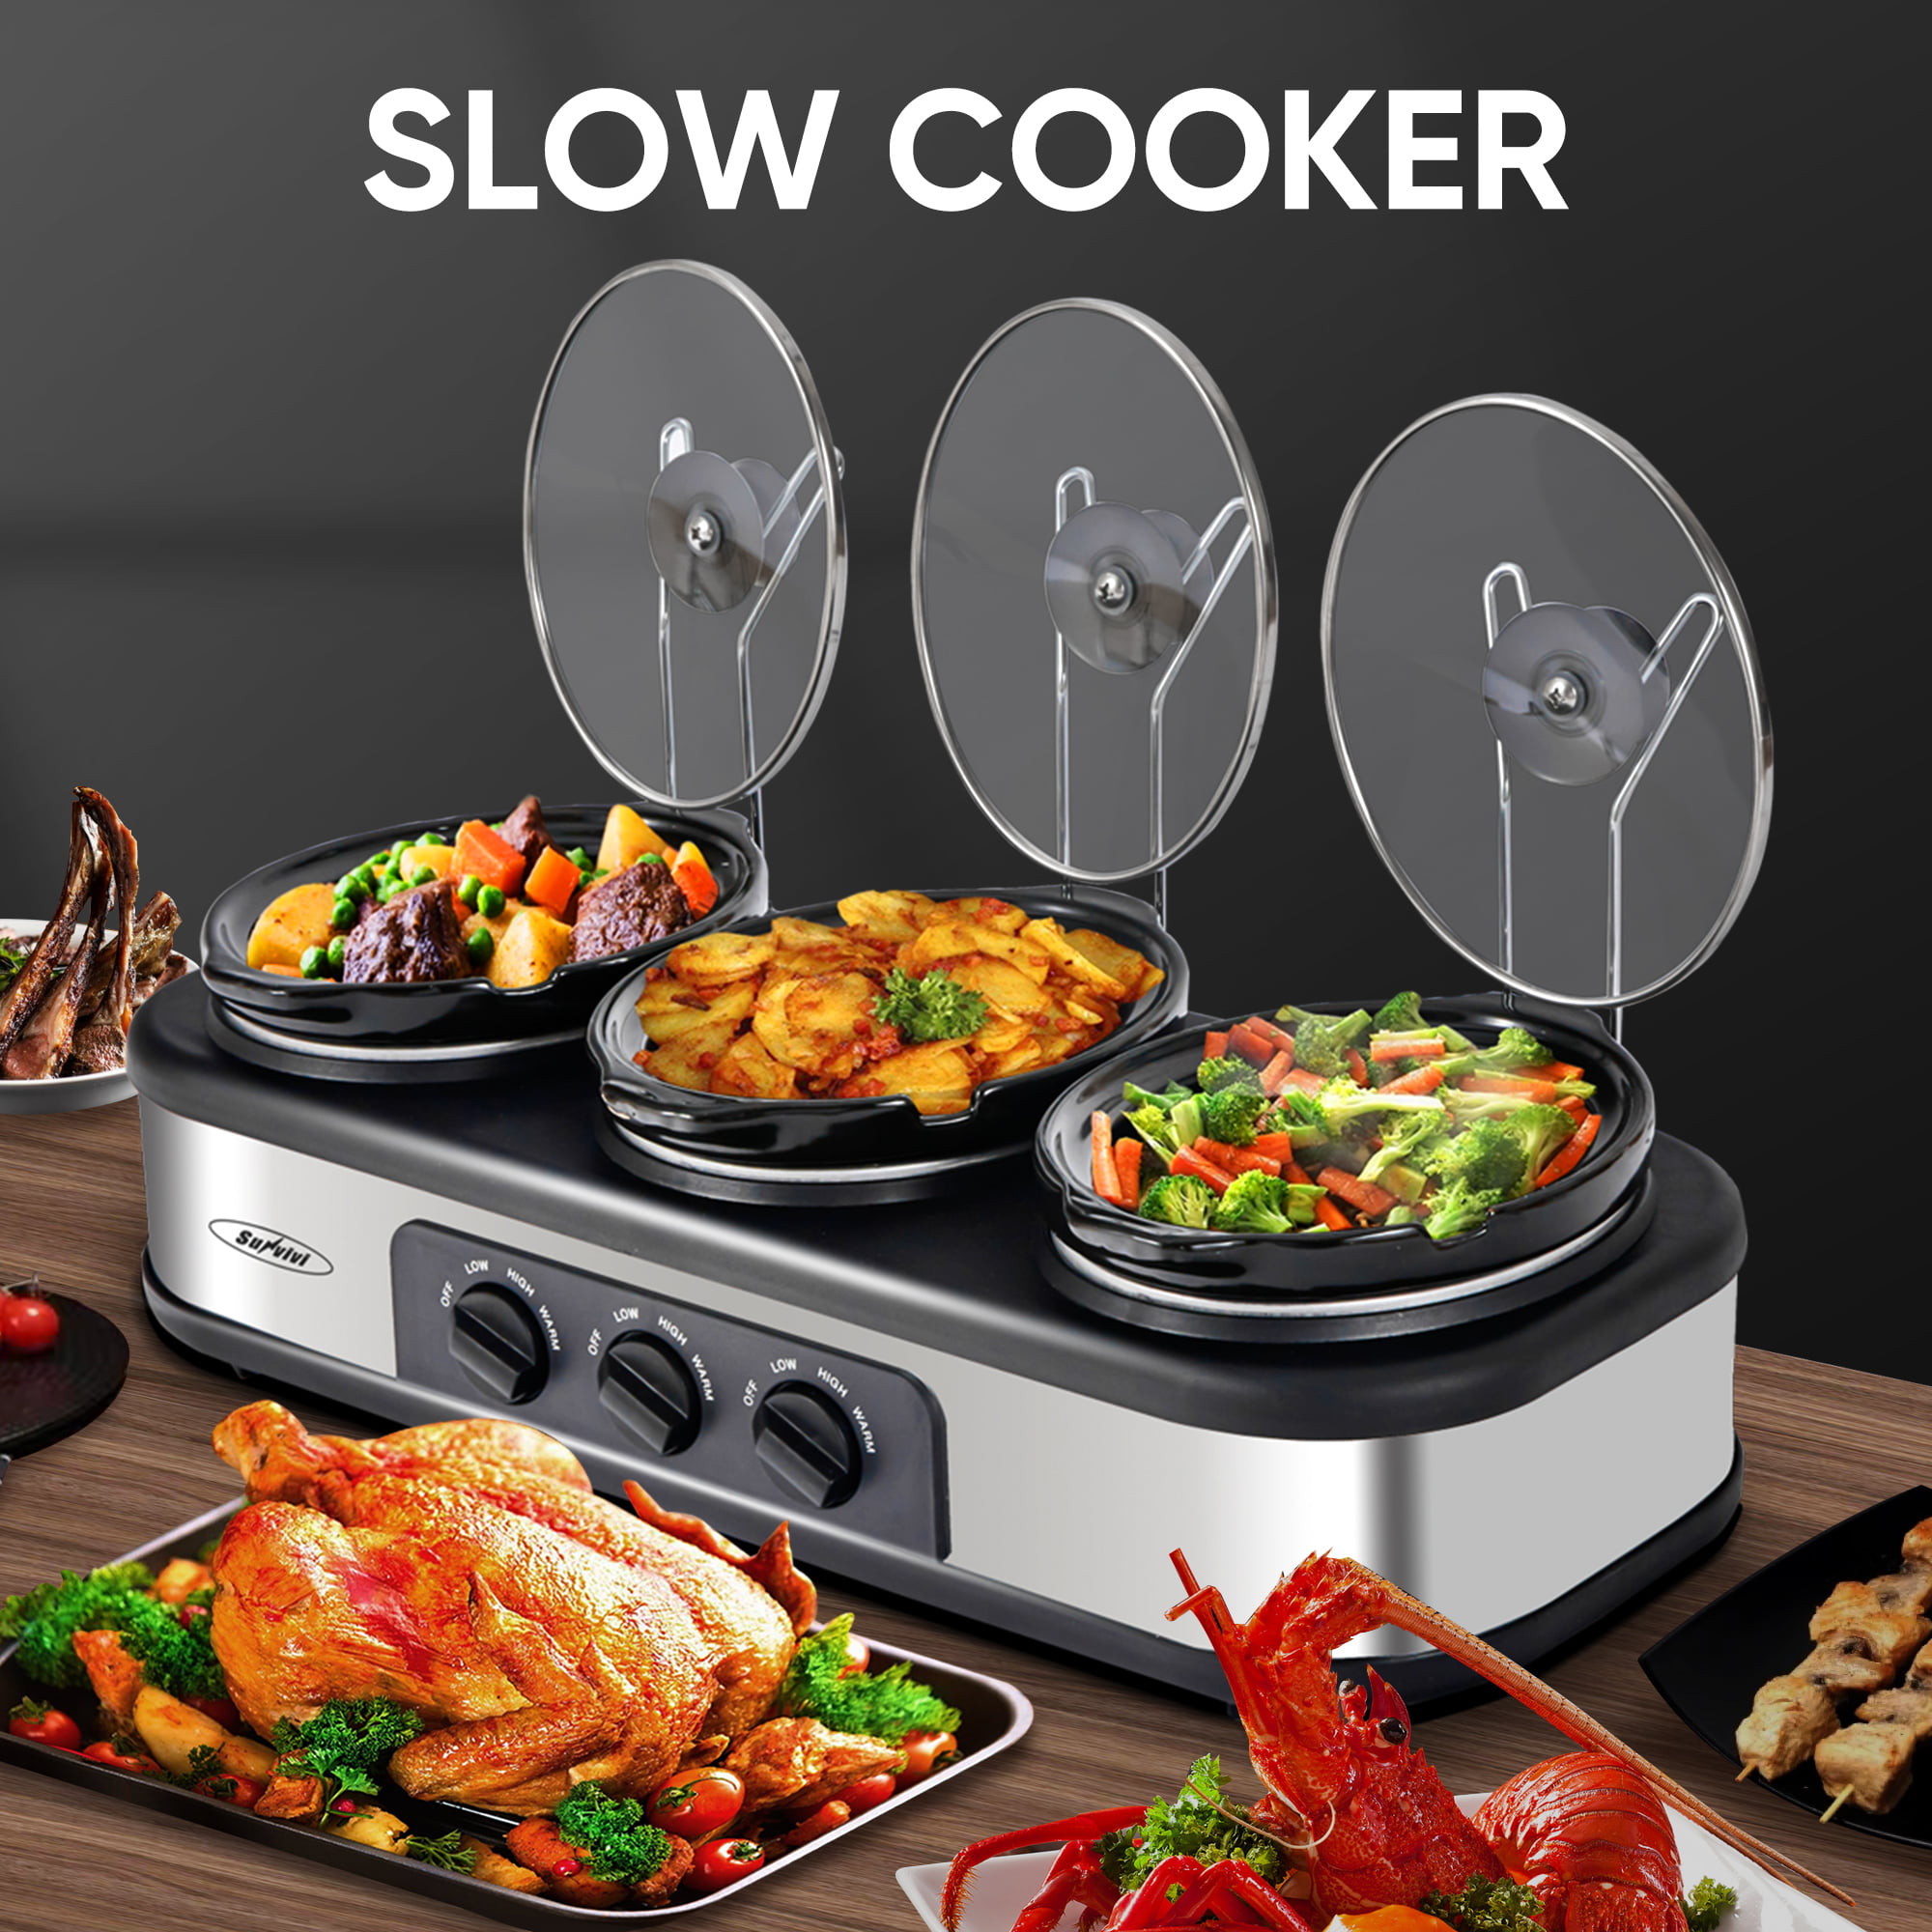 TRU 3 Crock Pot Slow Cooker 1.5 QT Buffet BS - 315r for sale online